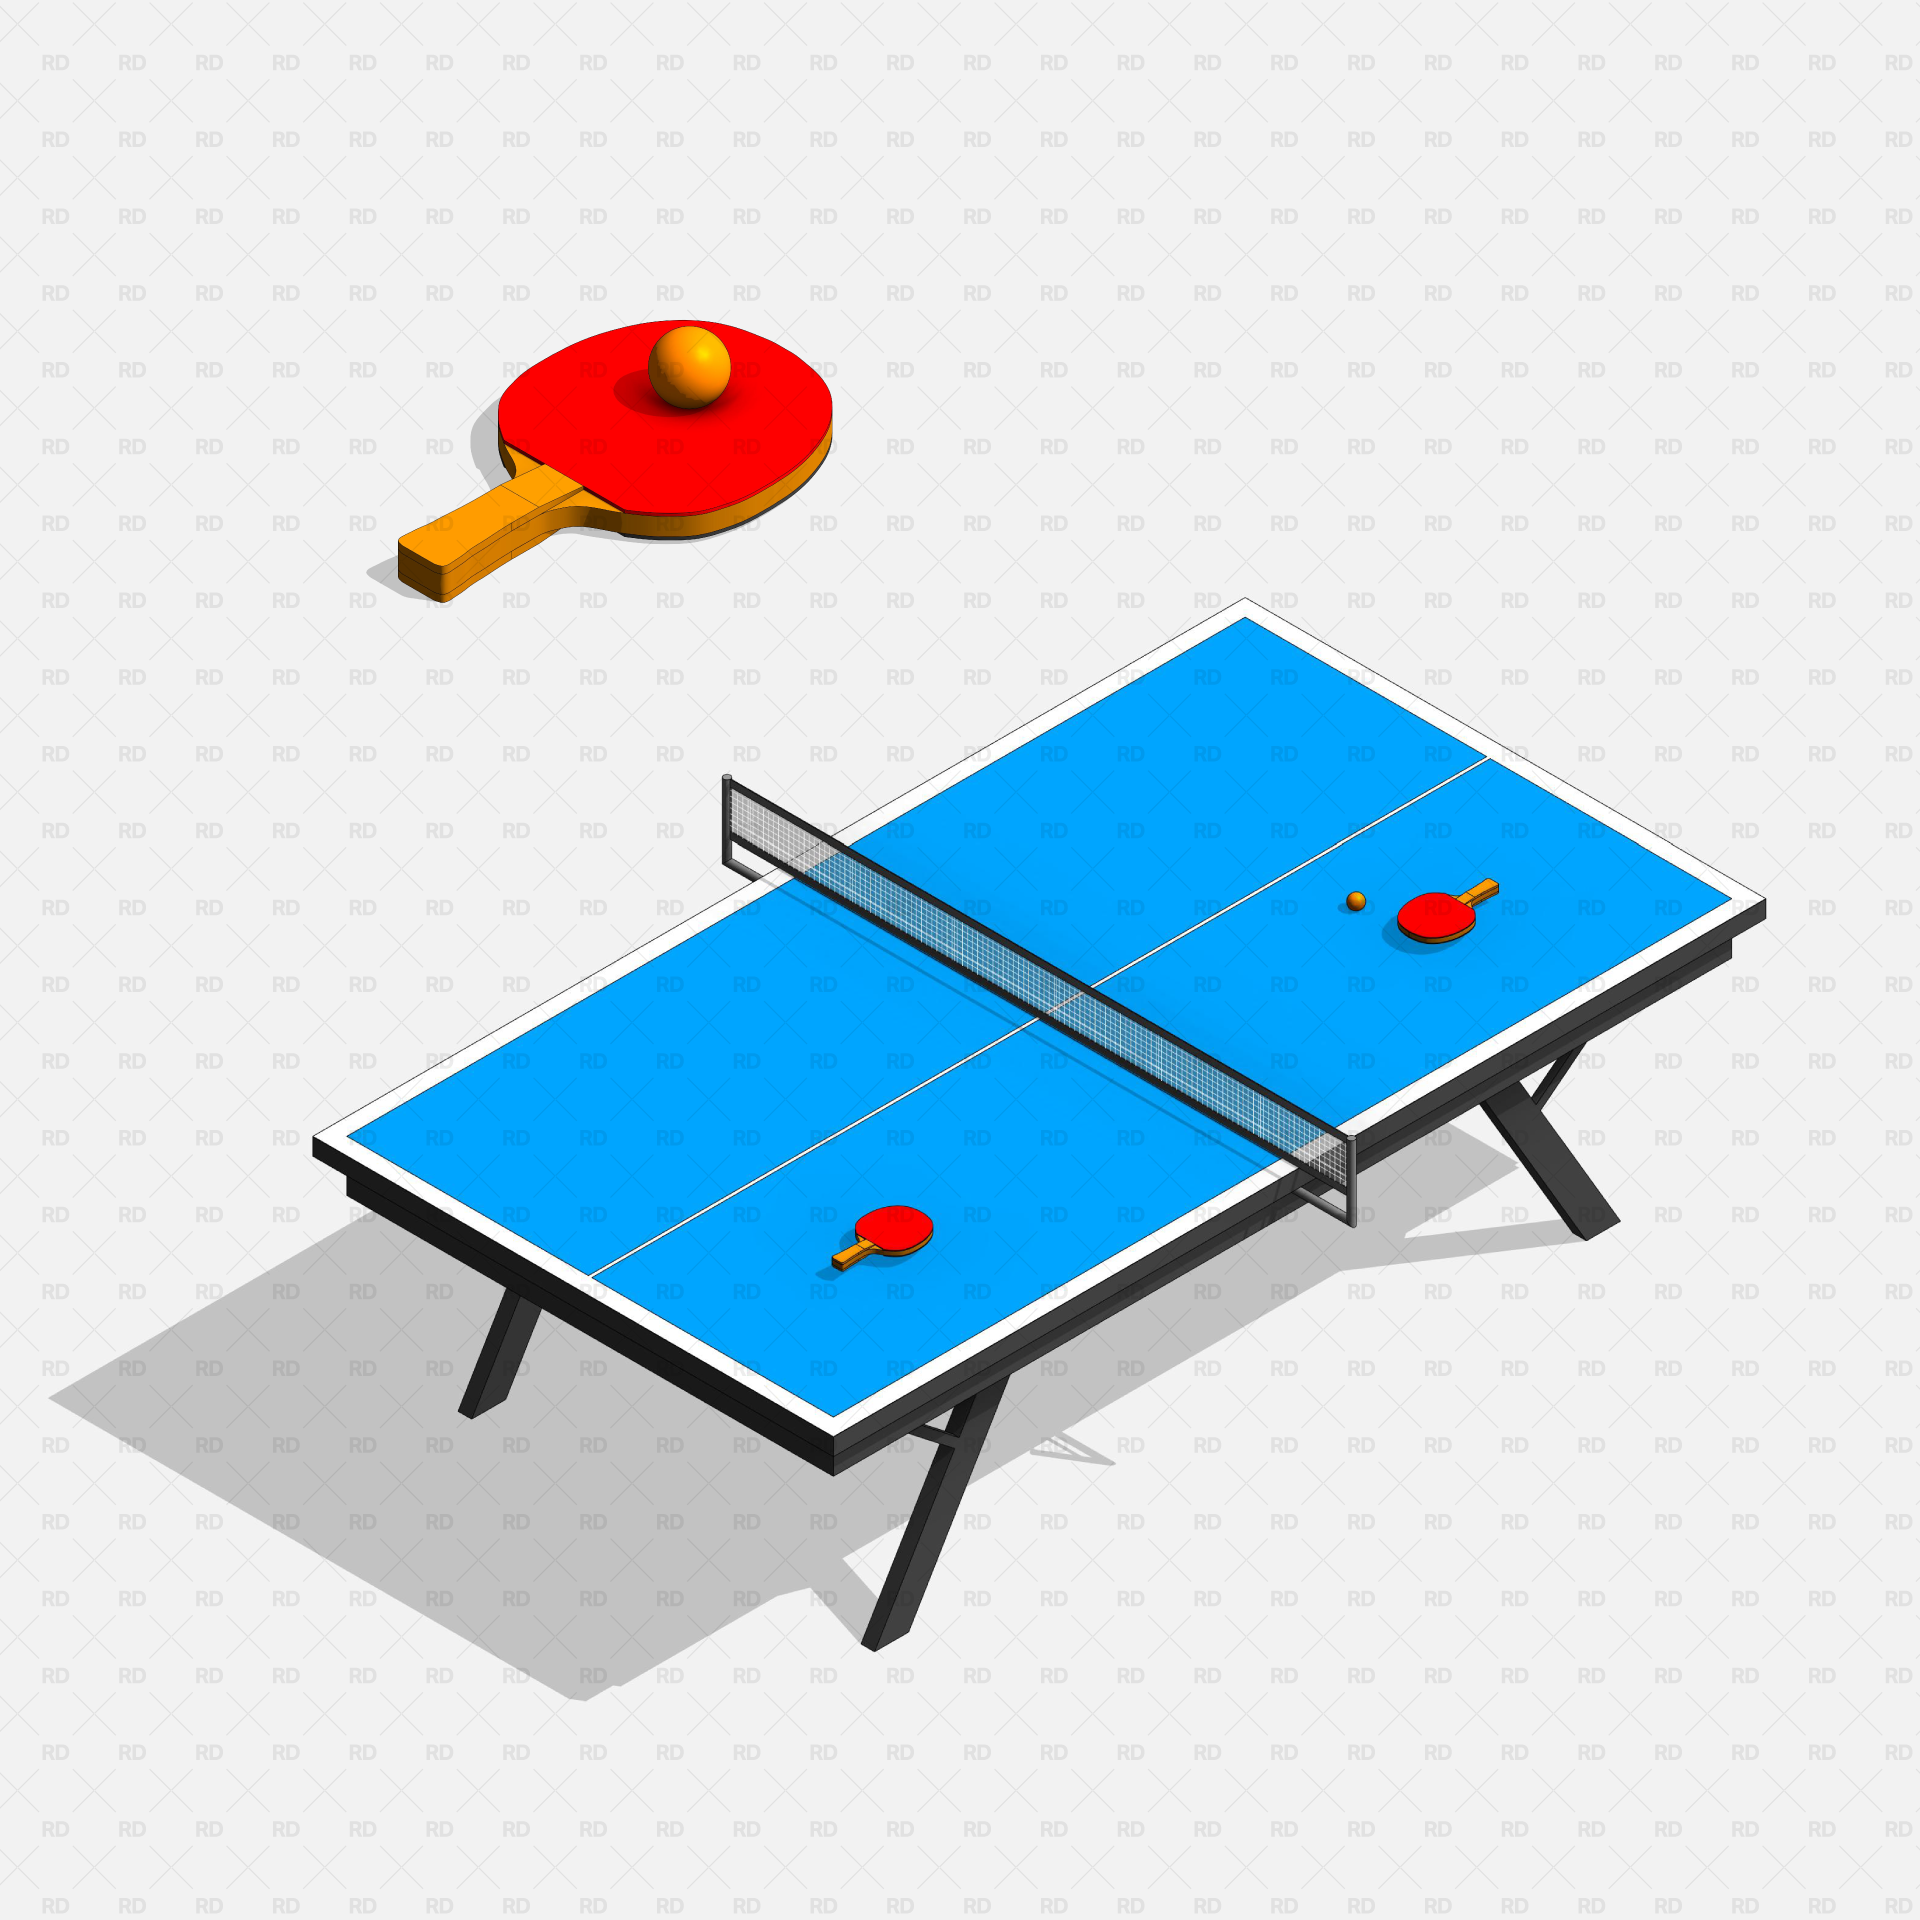 Ping Pong Revit 